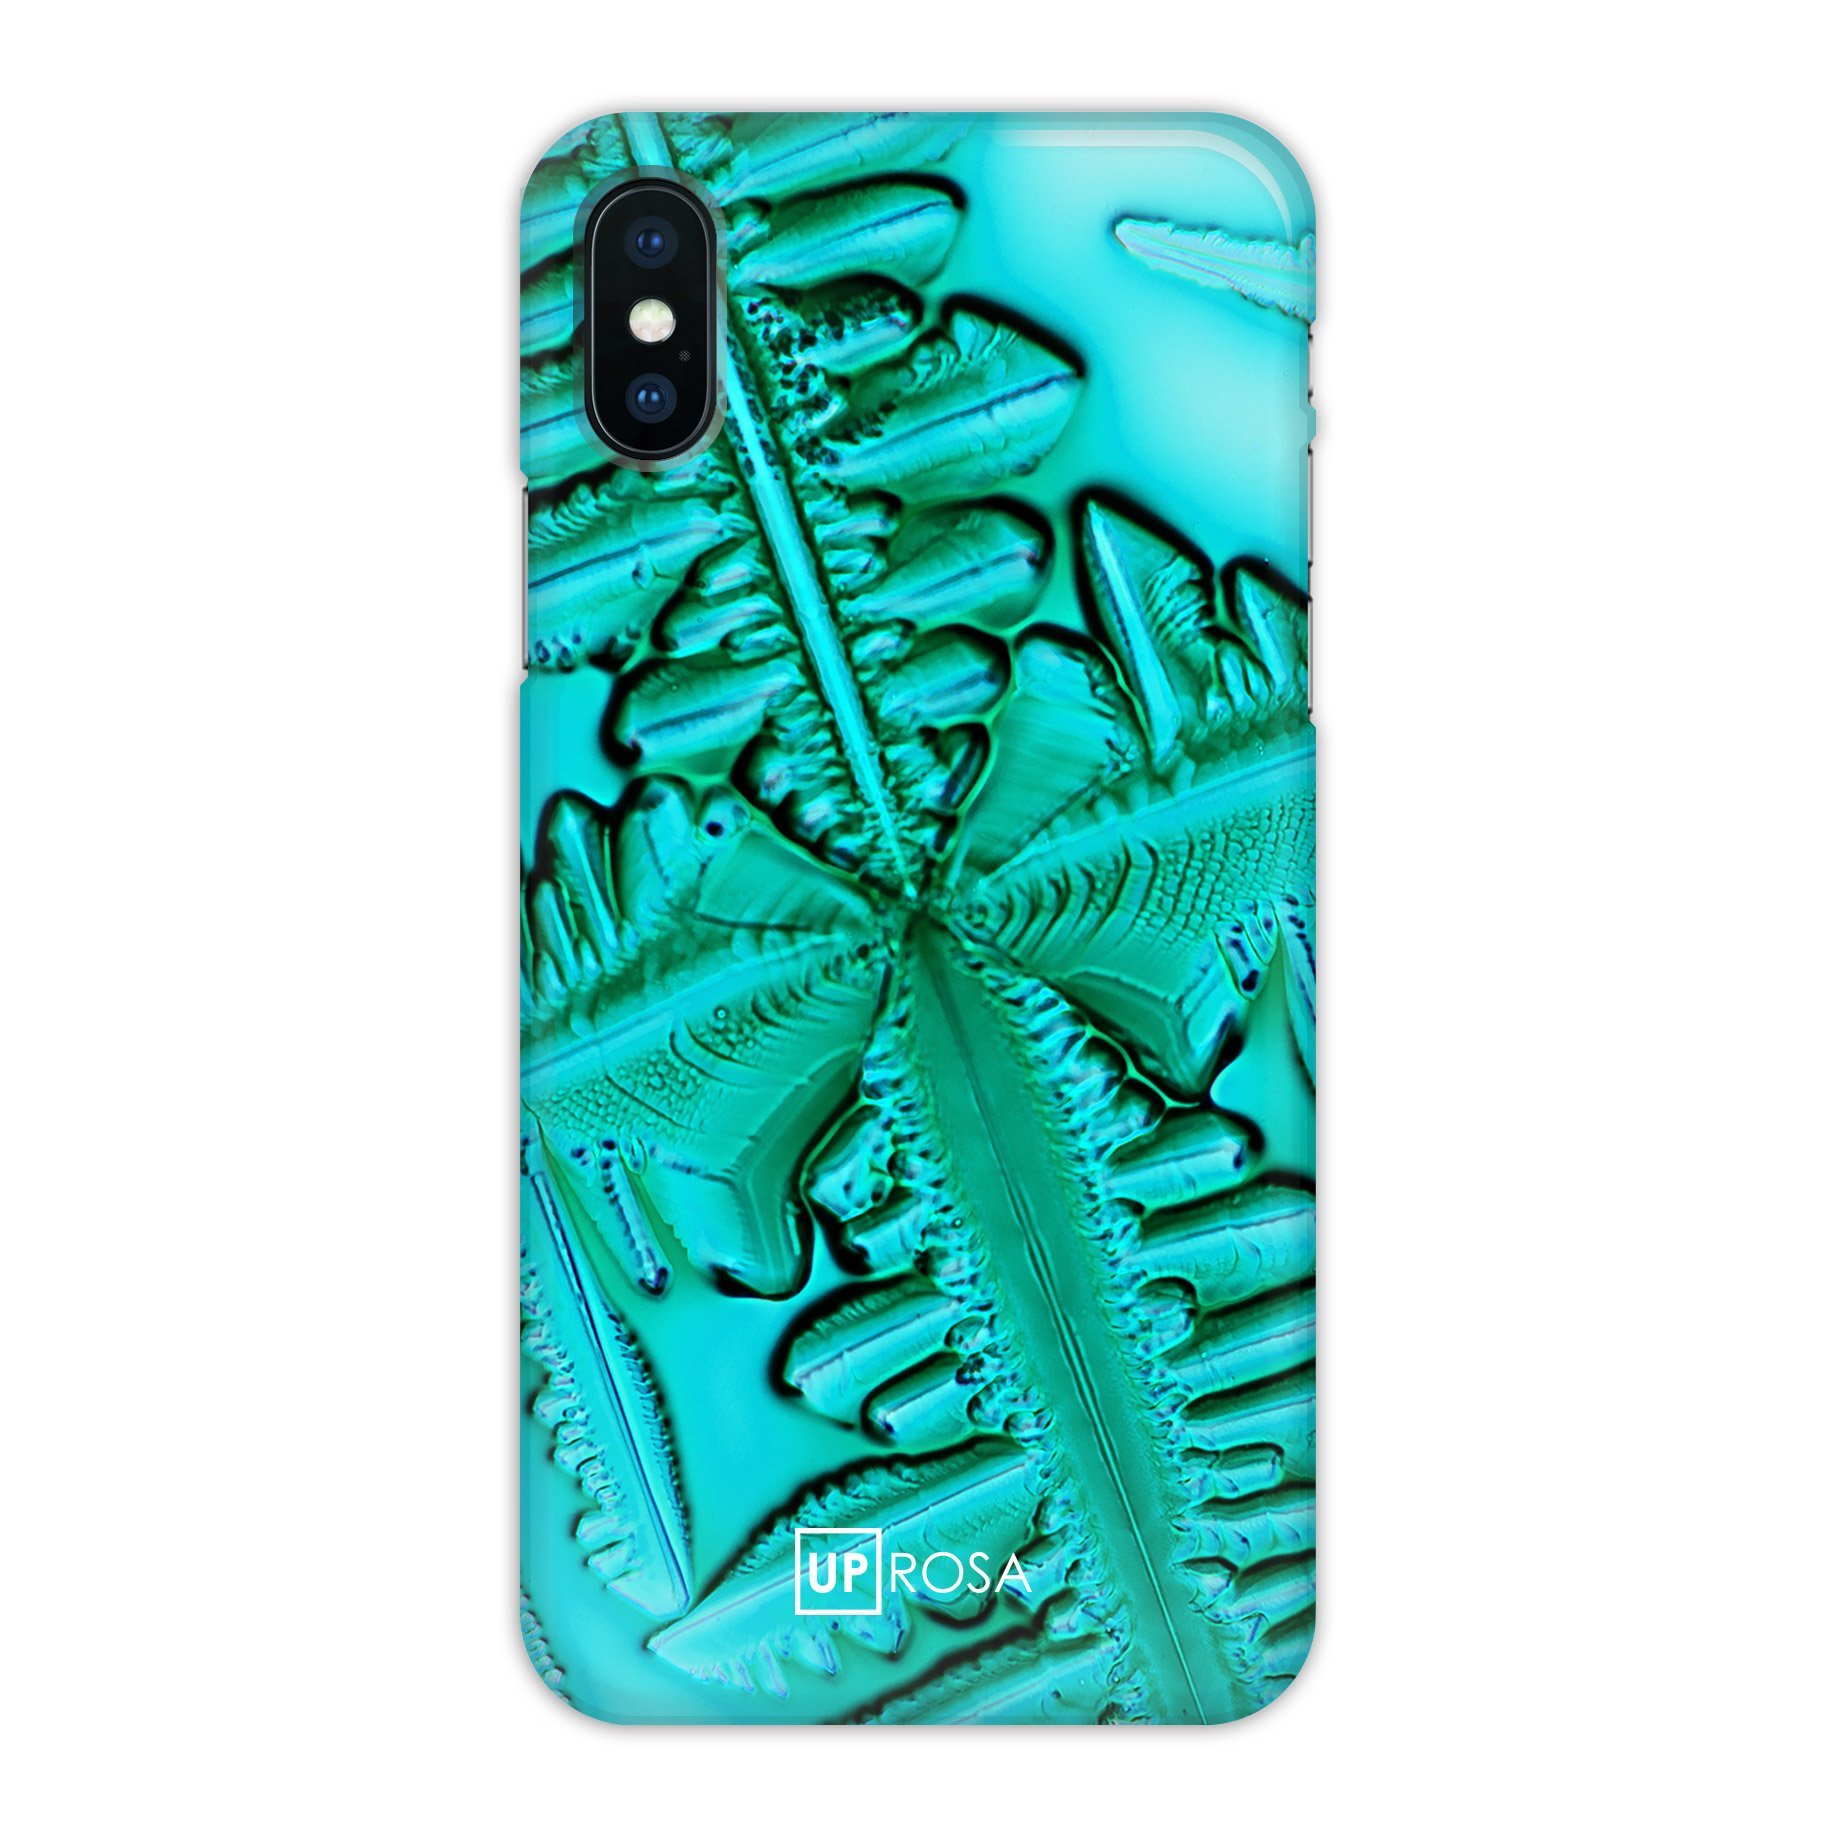 Uprosa Slim Line iPhone X Case - Blue Ice